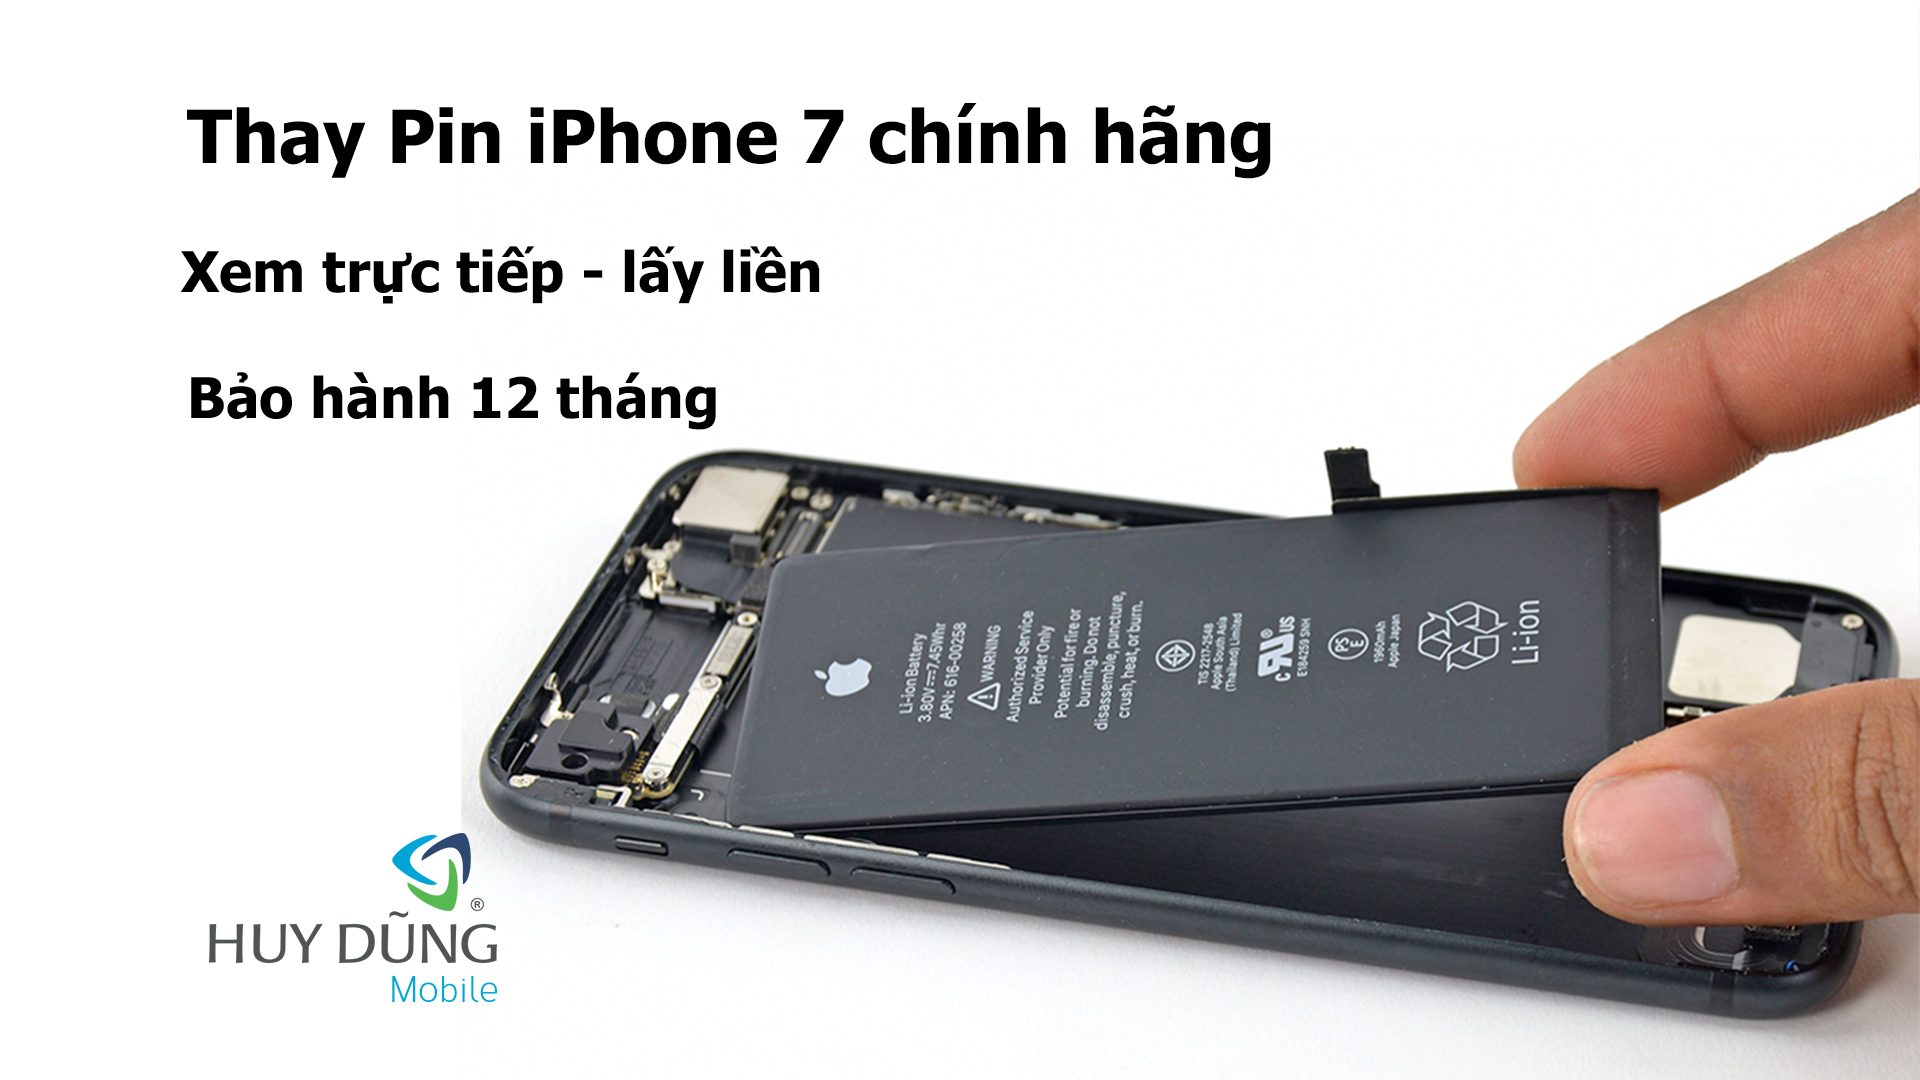 Thay pin iPhone 7